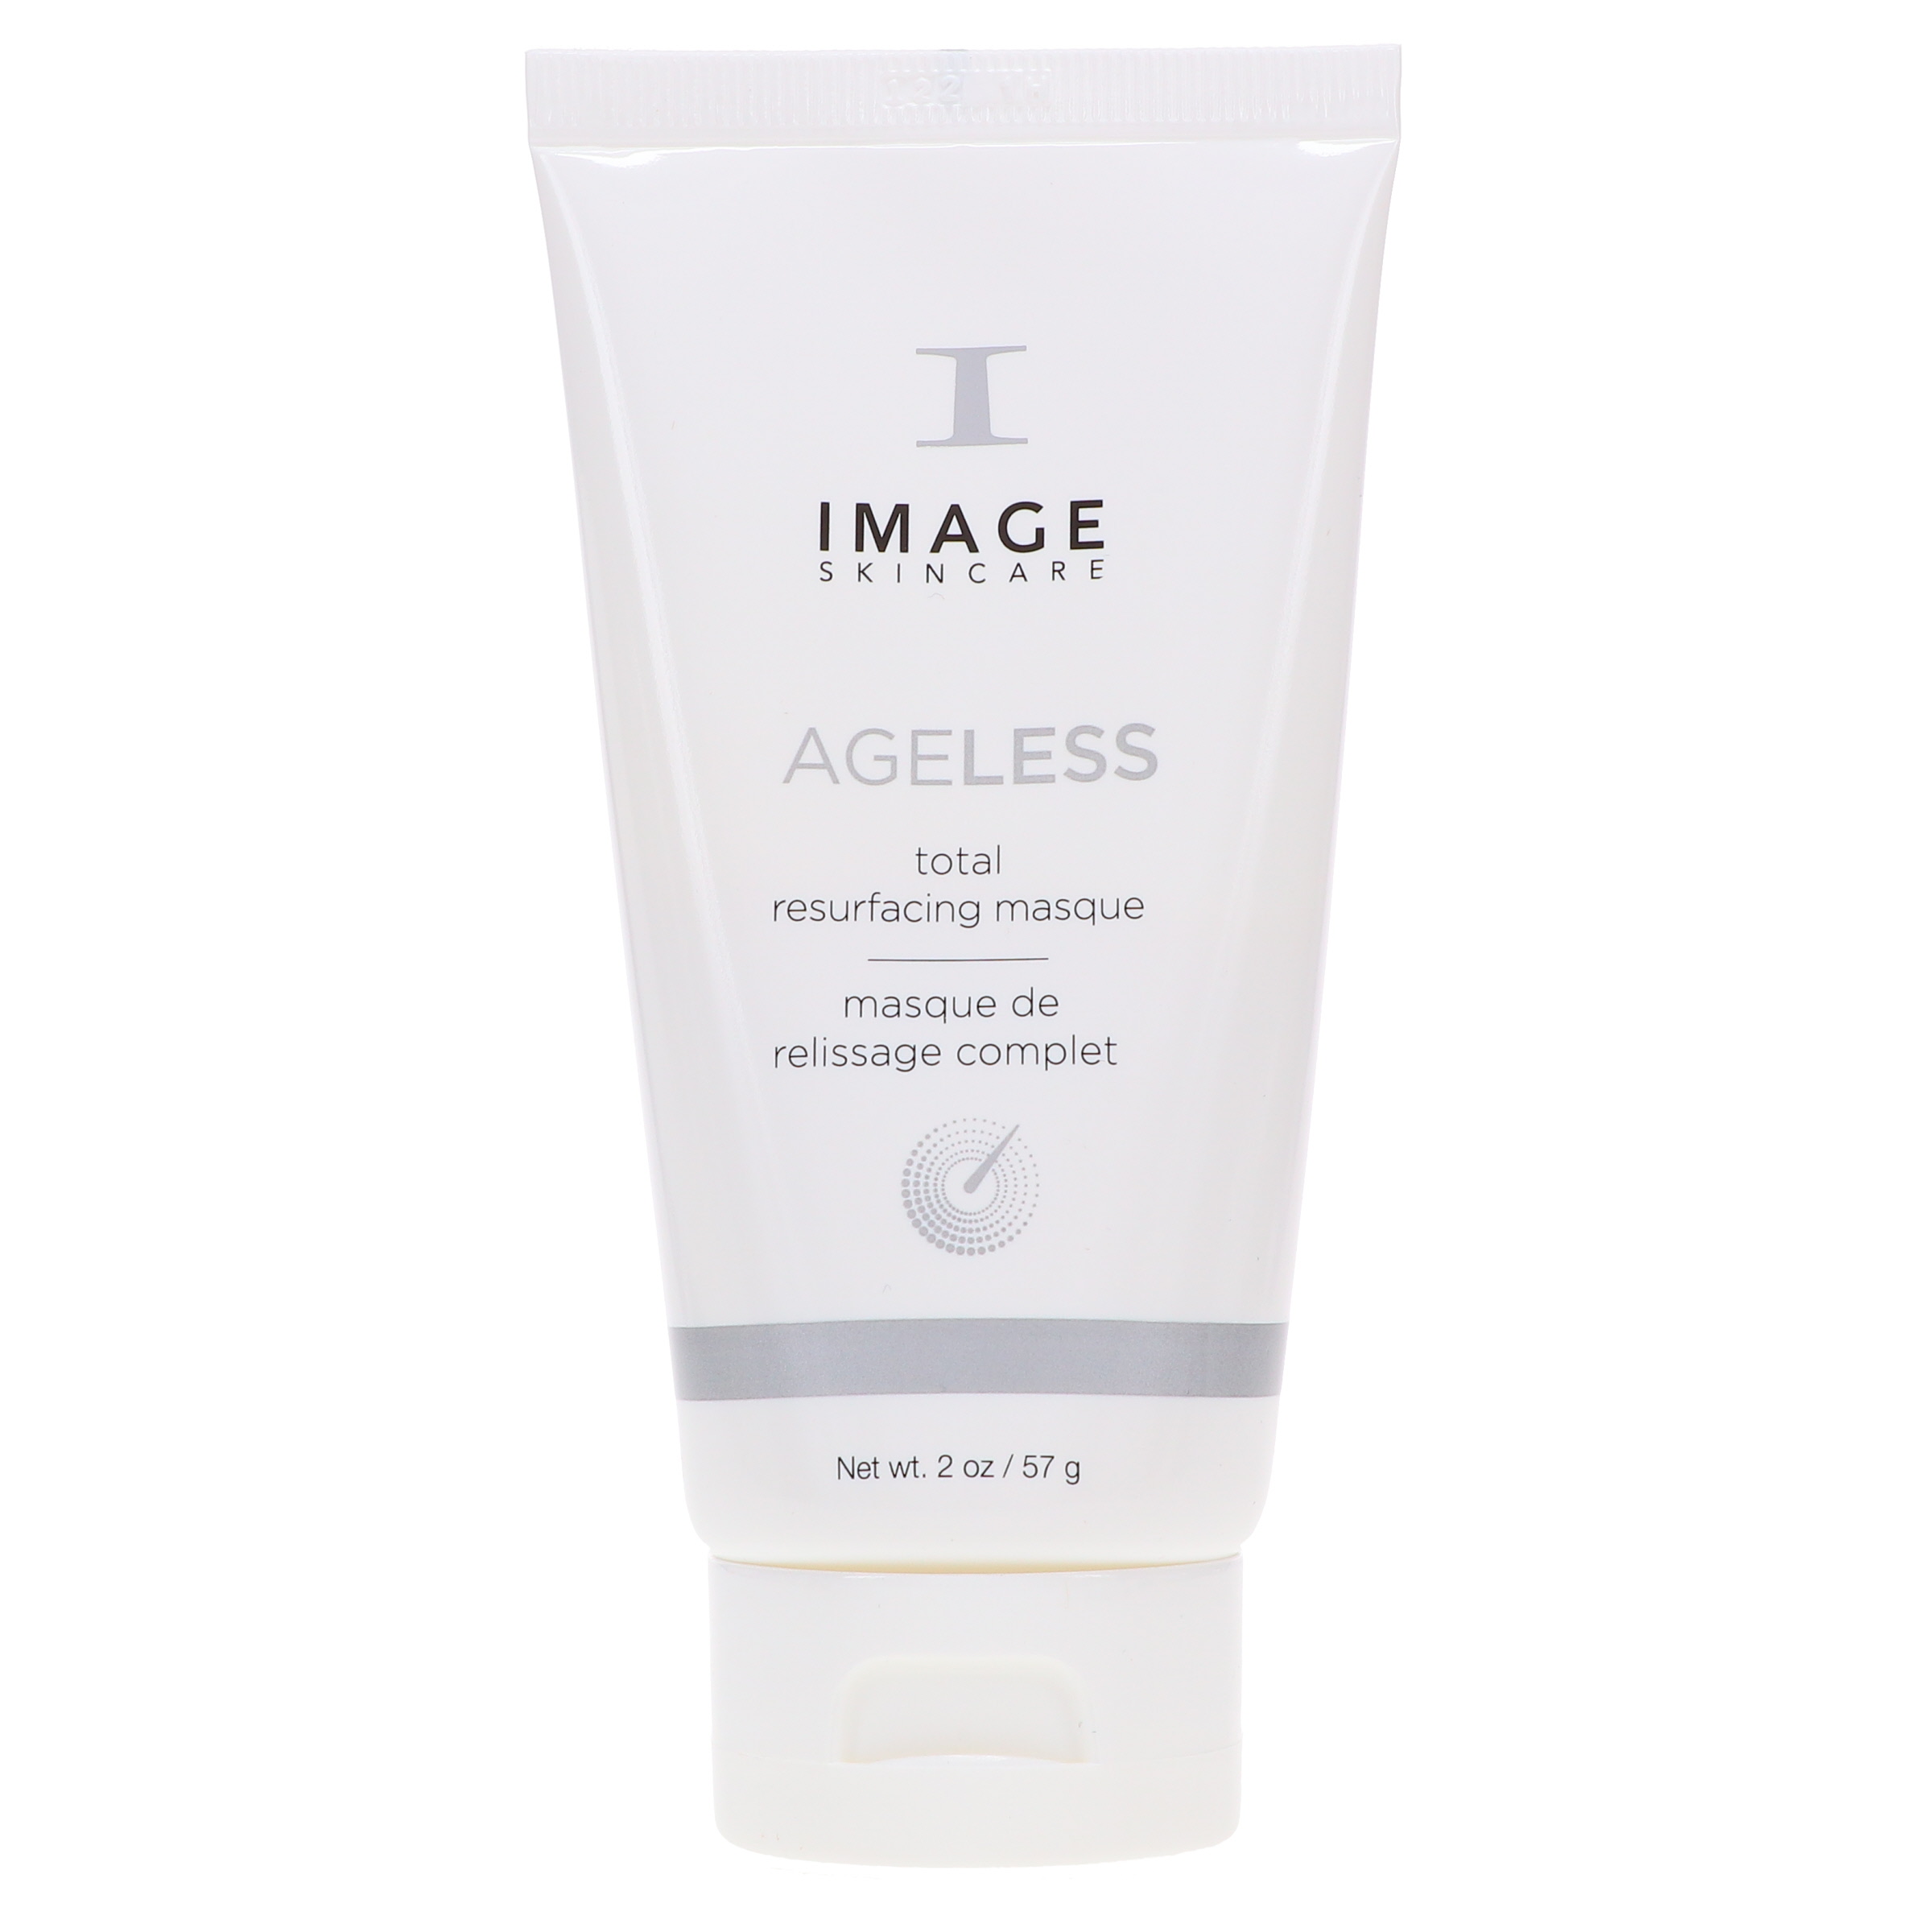 IMAGE Skincare Ageless Total Resurfacing Masque 2 oz - image 1 of 9